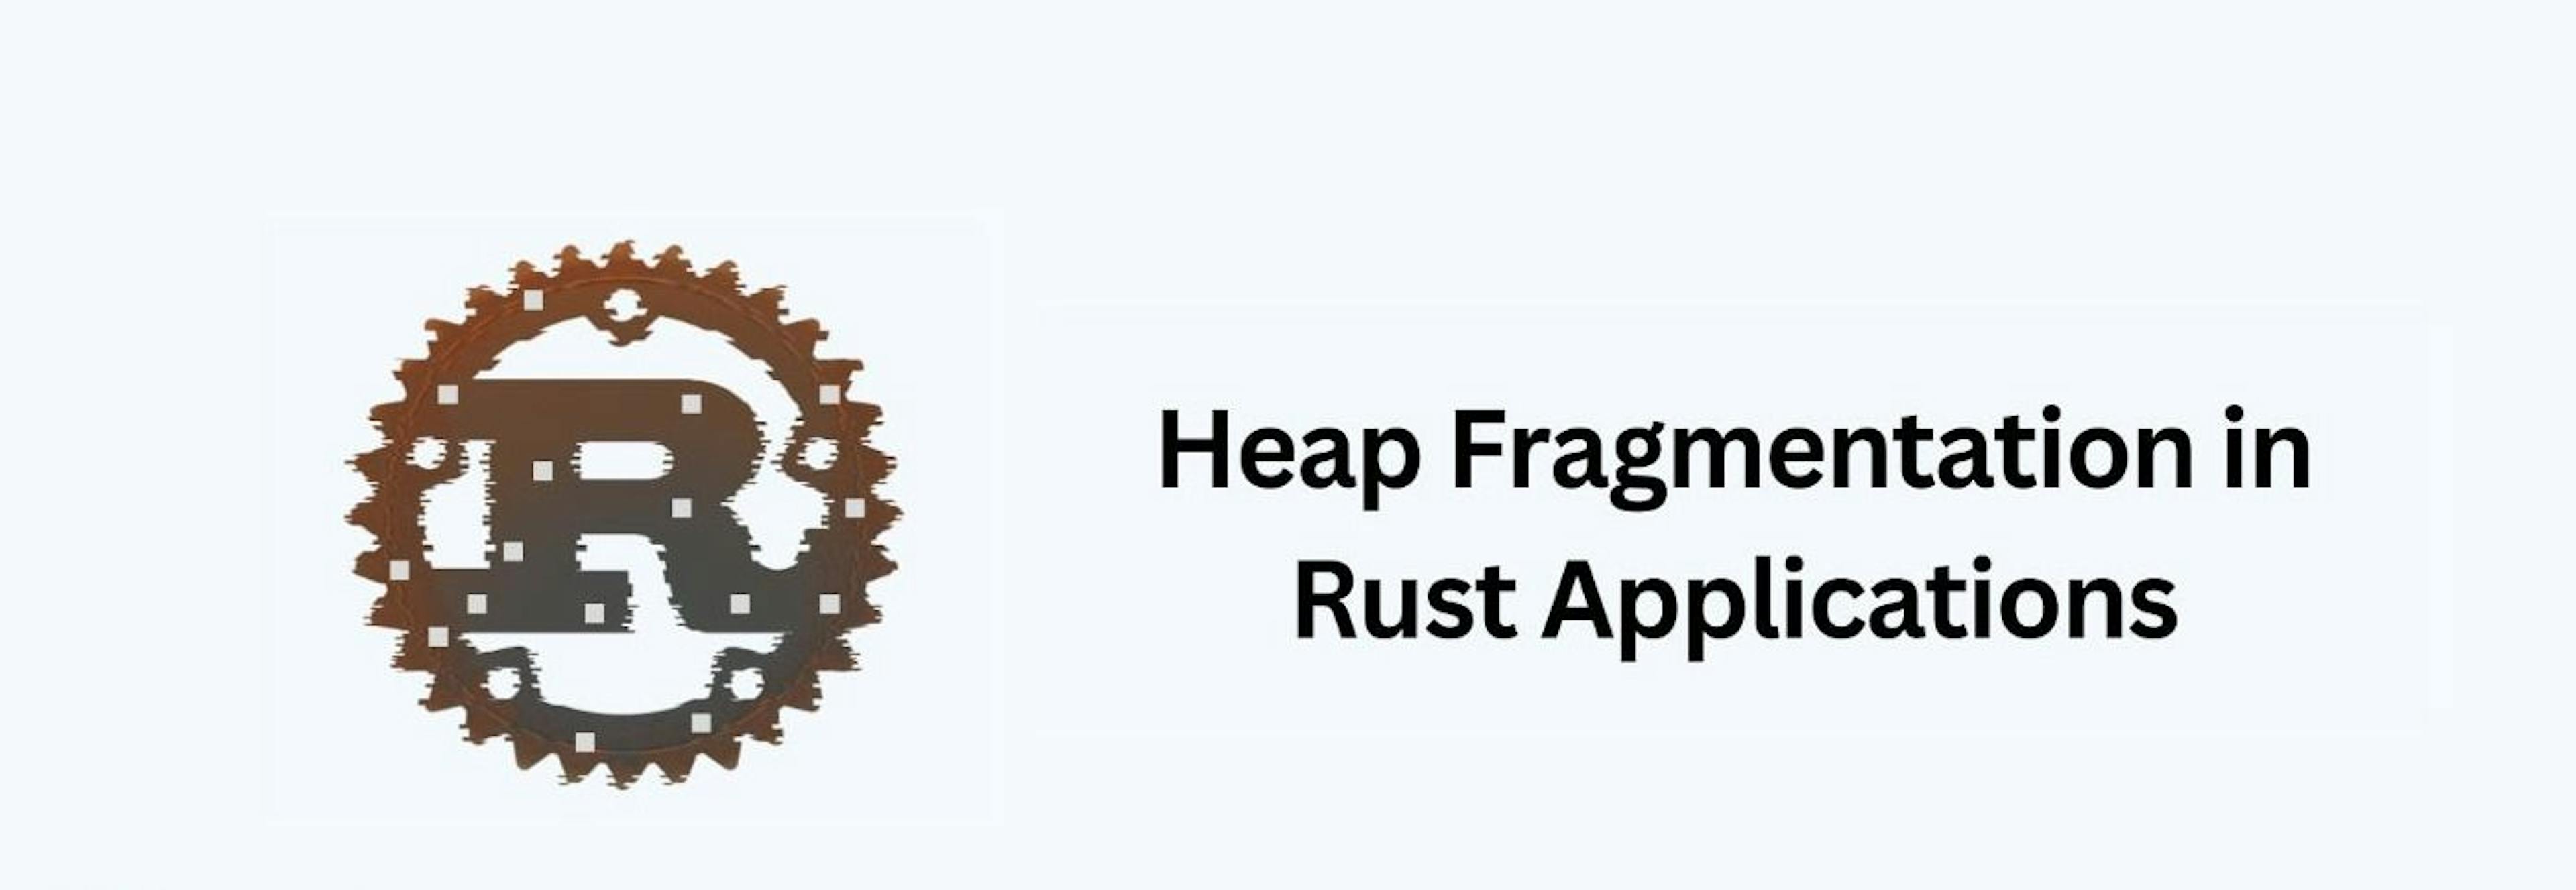 featured image - 如何在 Rust 应用程序中发现并避免堆碎片